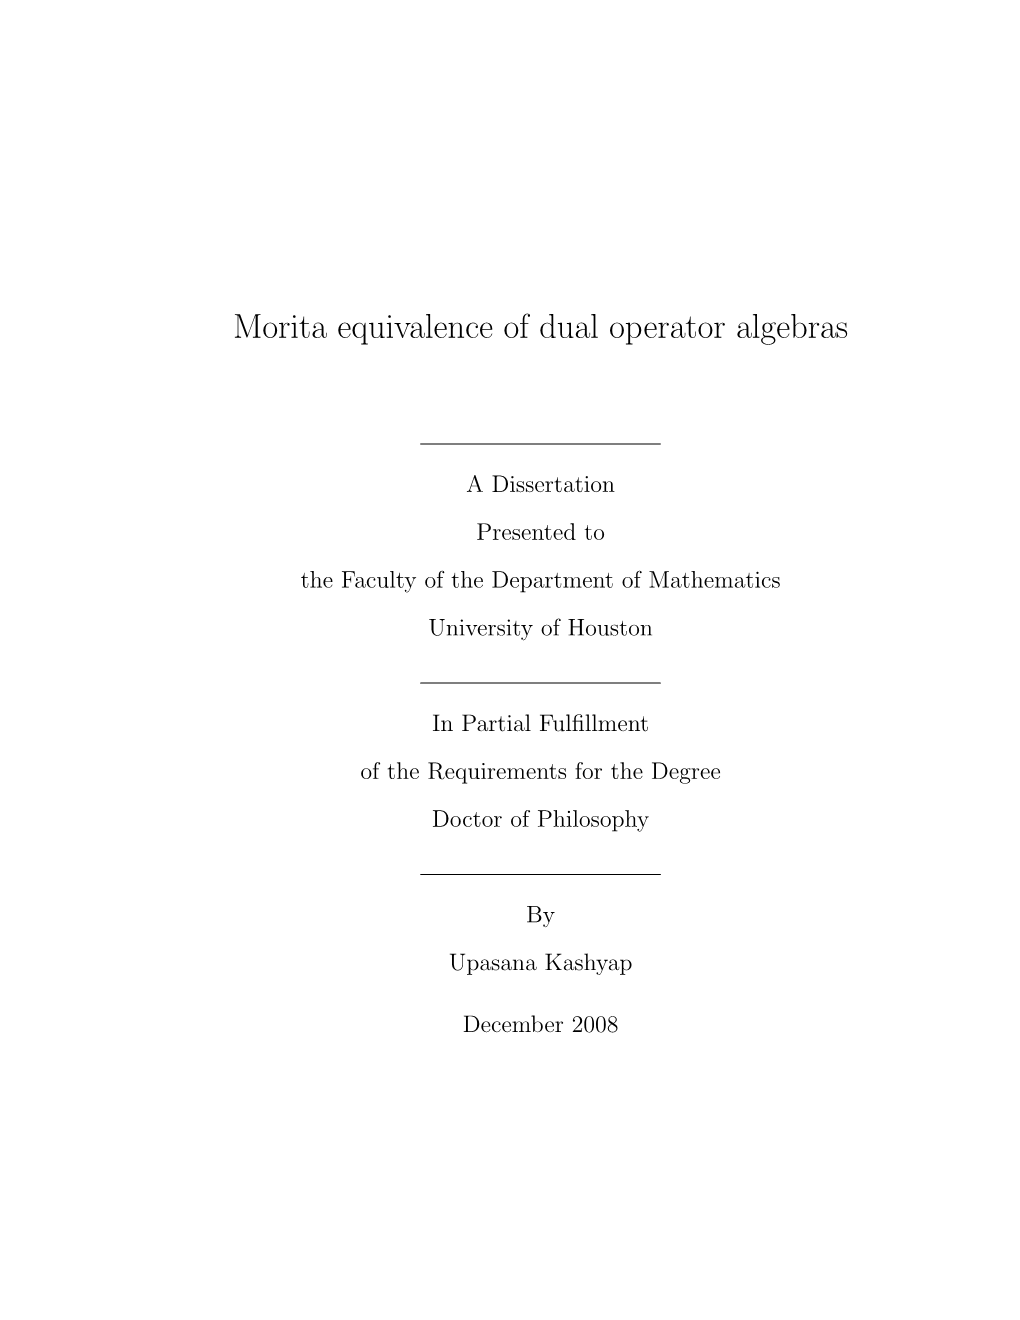 Morita Equivalence of Dual Operator Algebras